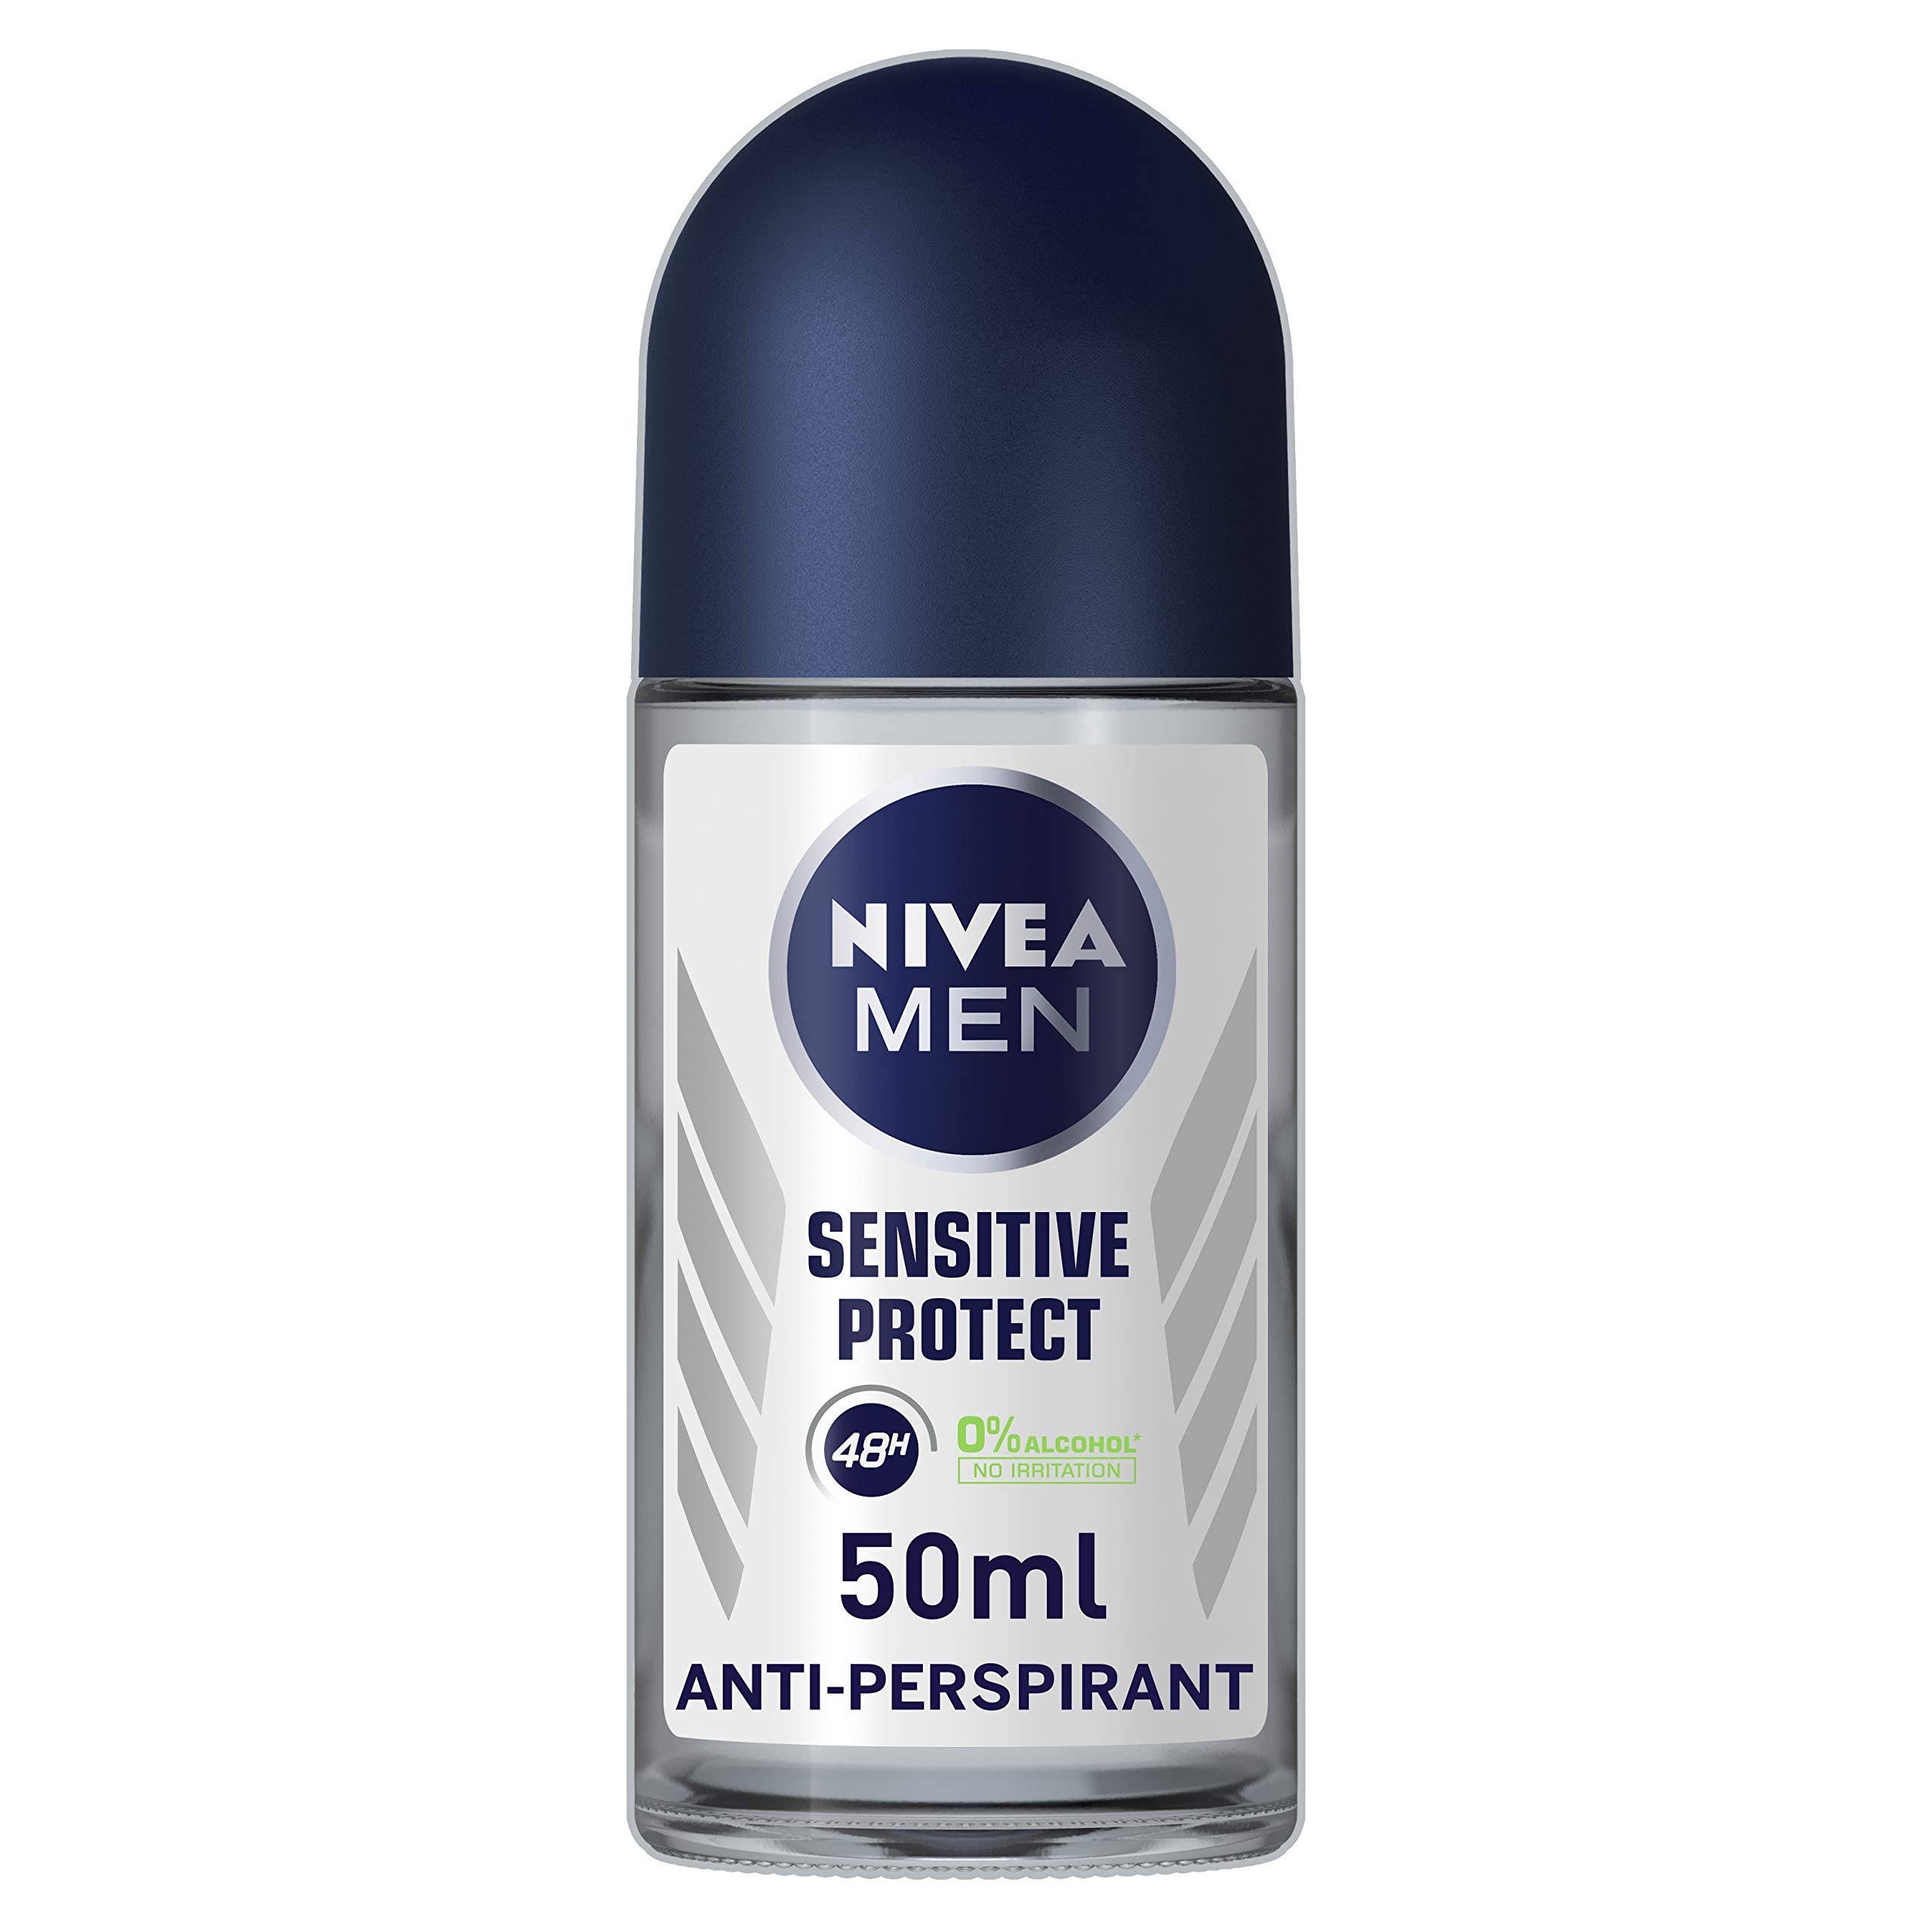 Nivea Men Sensitive Protect Anti Perspirant Deodorant Roll On - 50ml